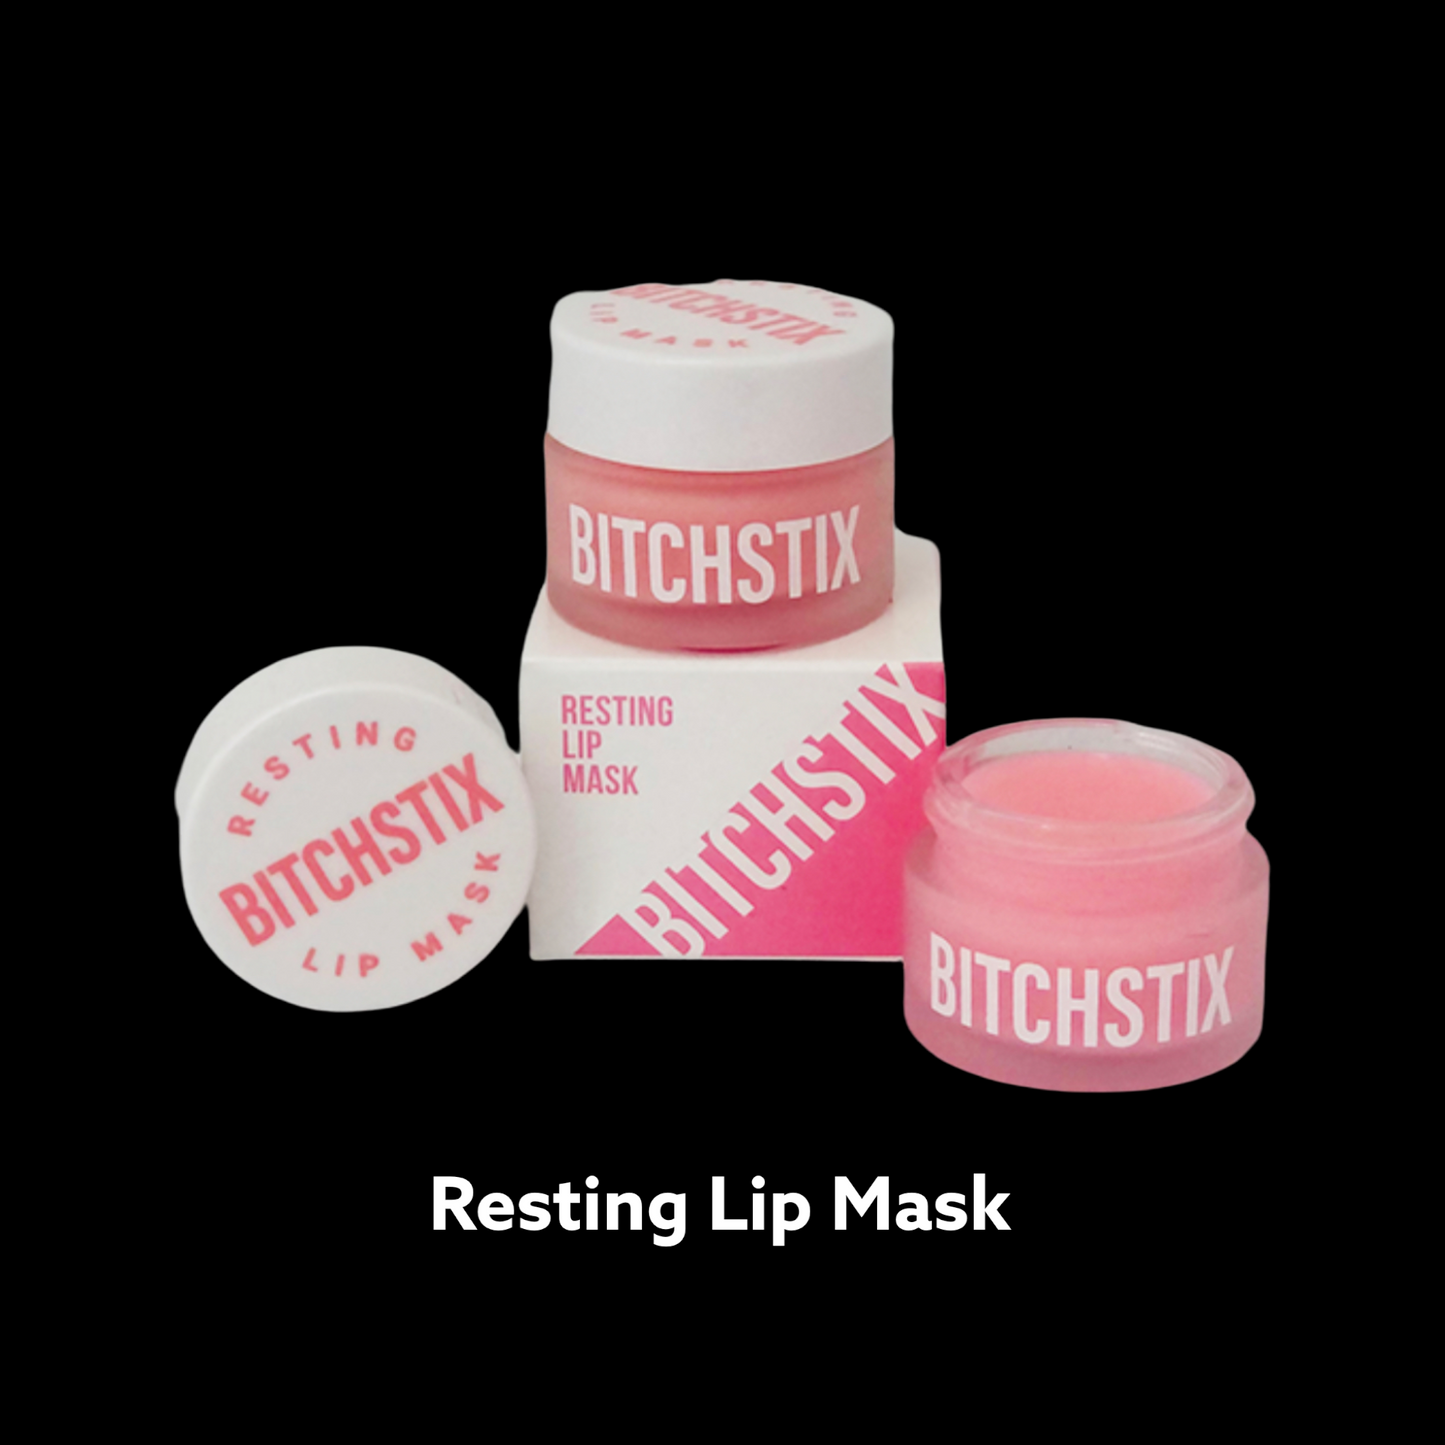 BITCHSTIX Resting Lip Mask